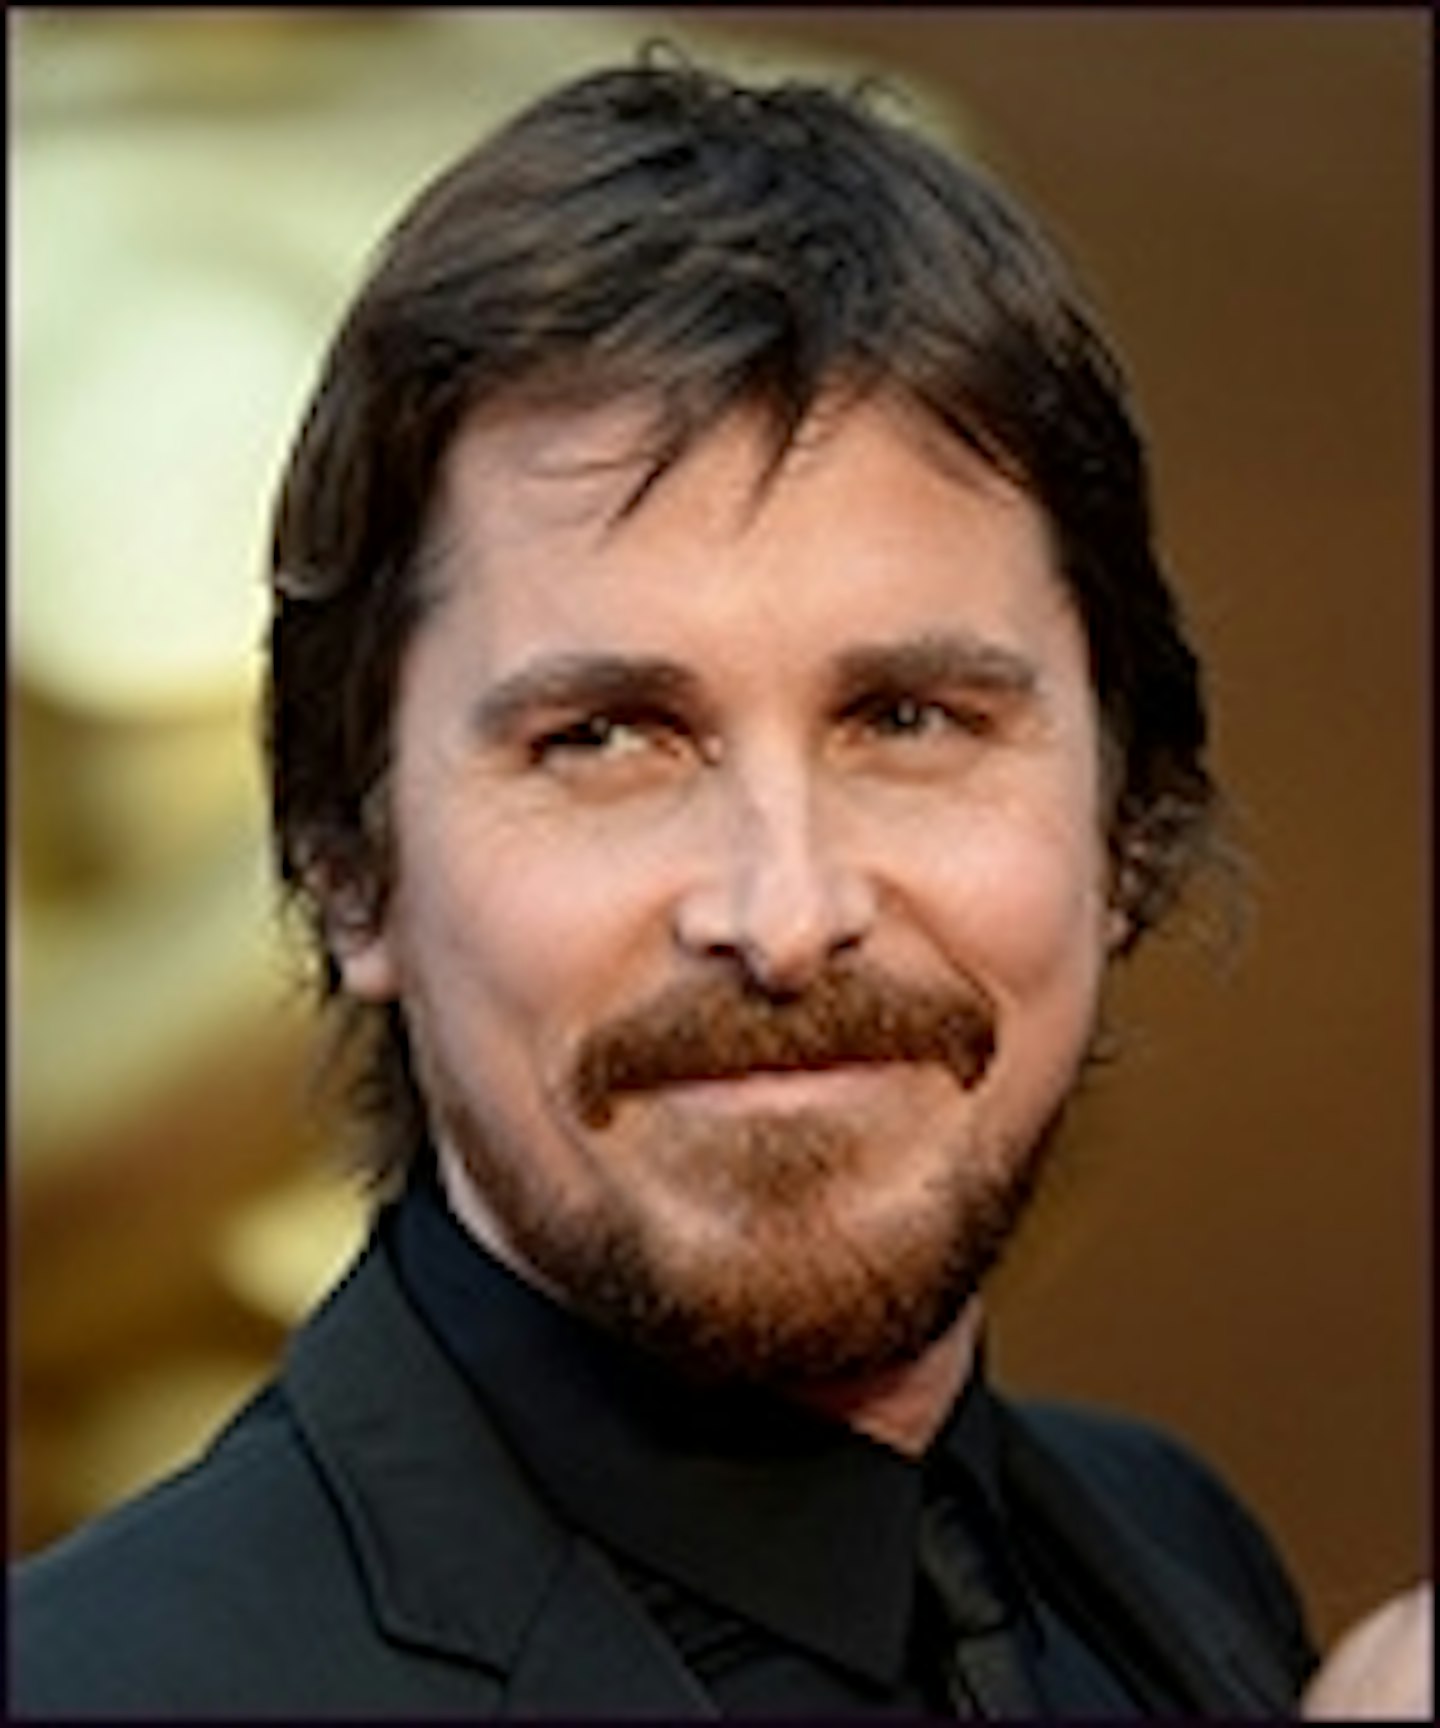 Christian Bale In The Driver's Seat For Michael Mann's Ferrari